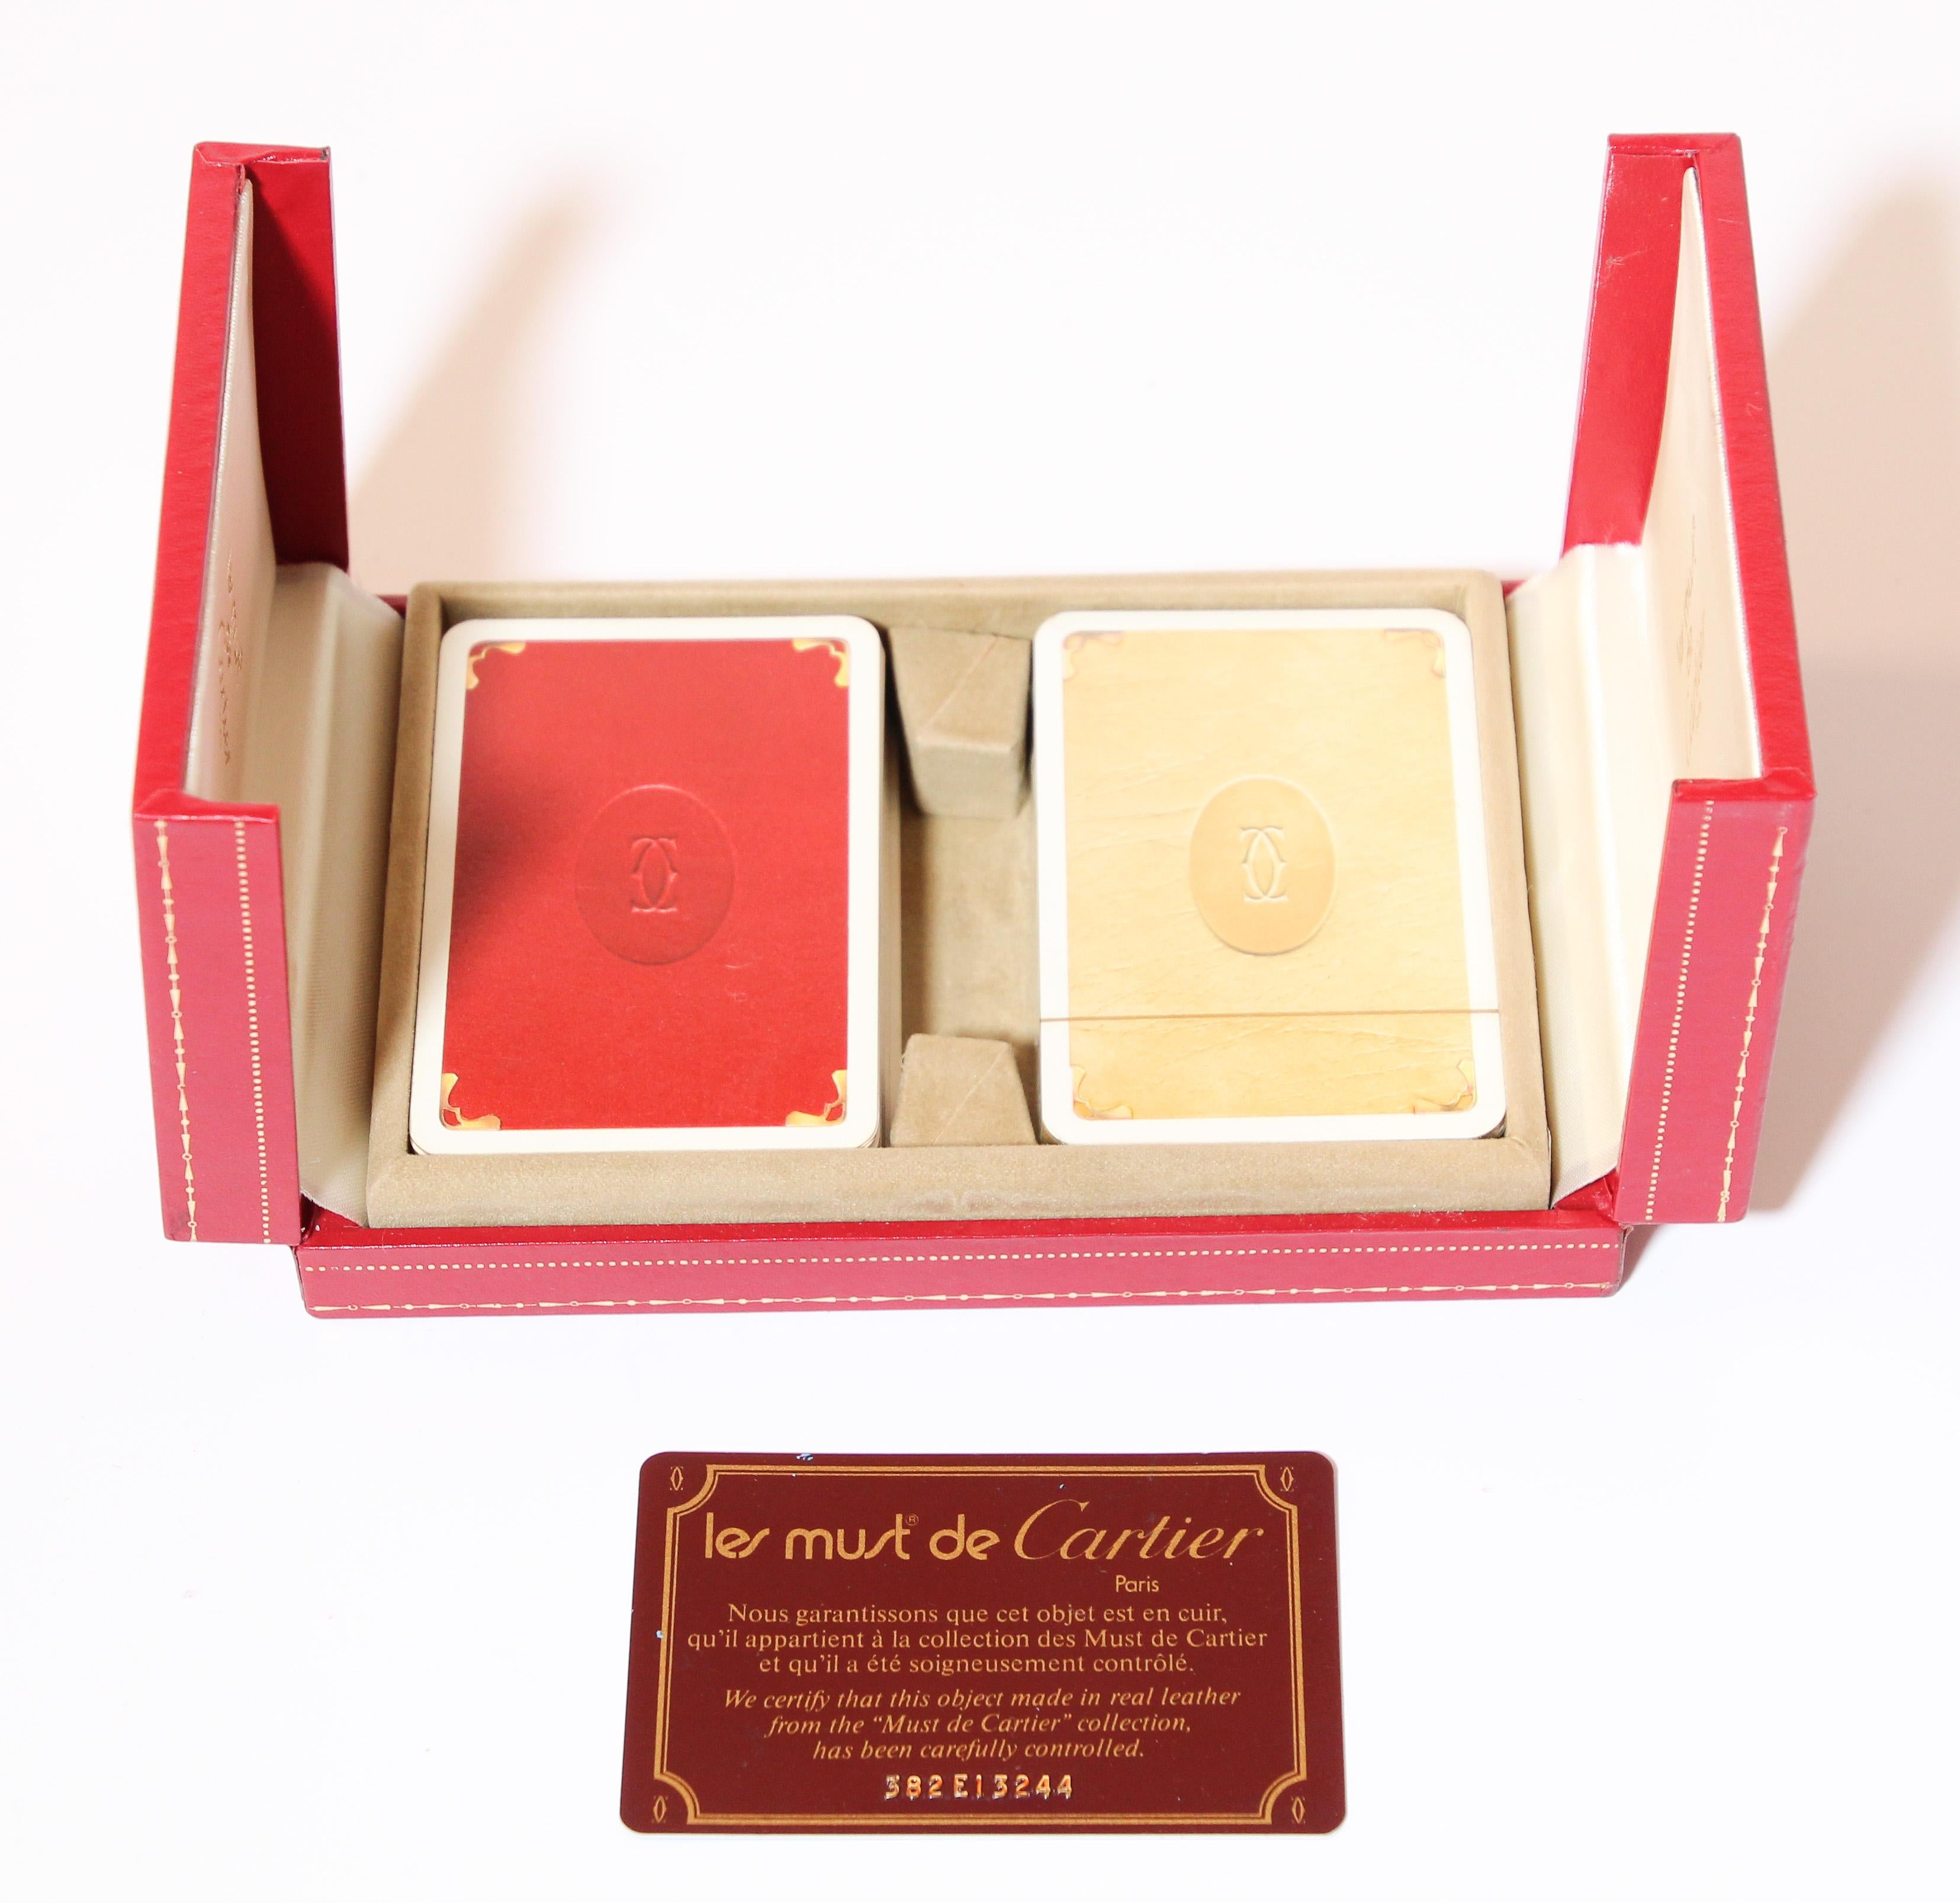 Must de Cartier Paris Vintage Playing Poker or Bridge Cards in Red Original Box 2